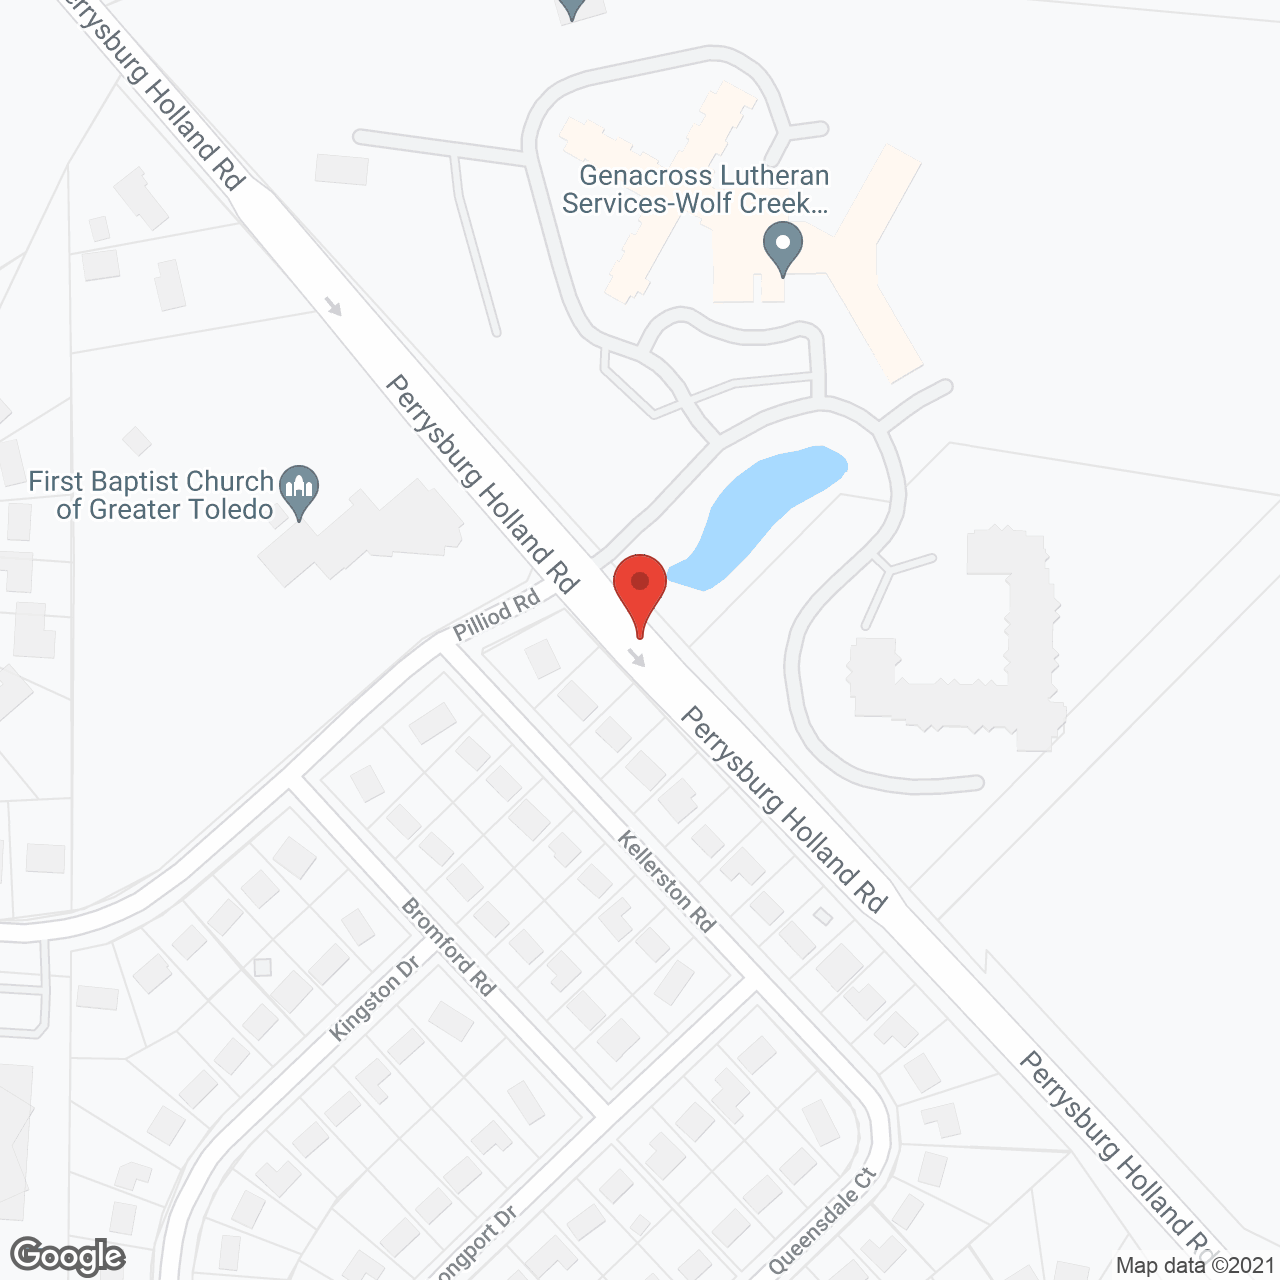 Genacross Lutheran Services Wolf Creek Campus in google map